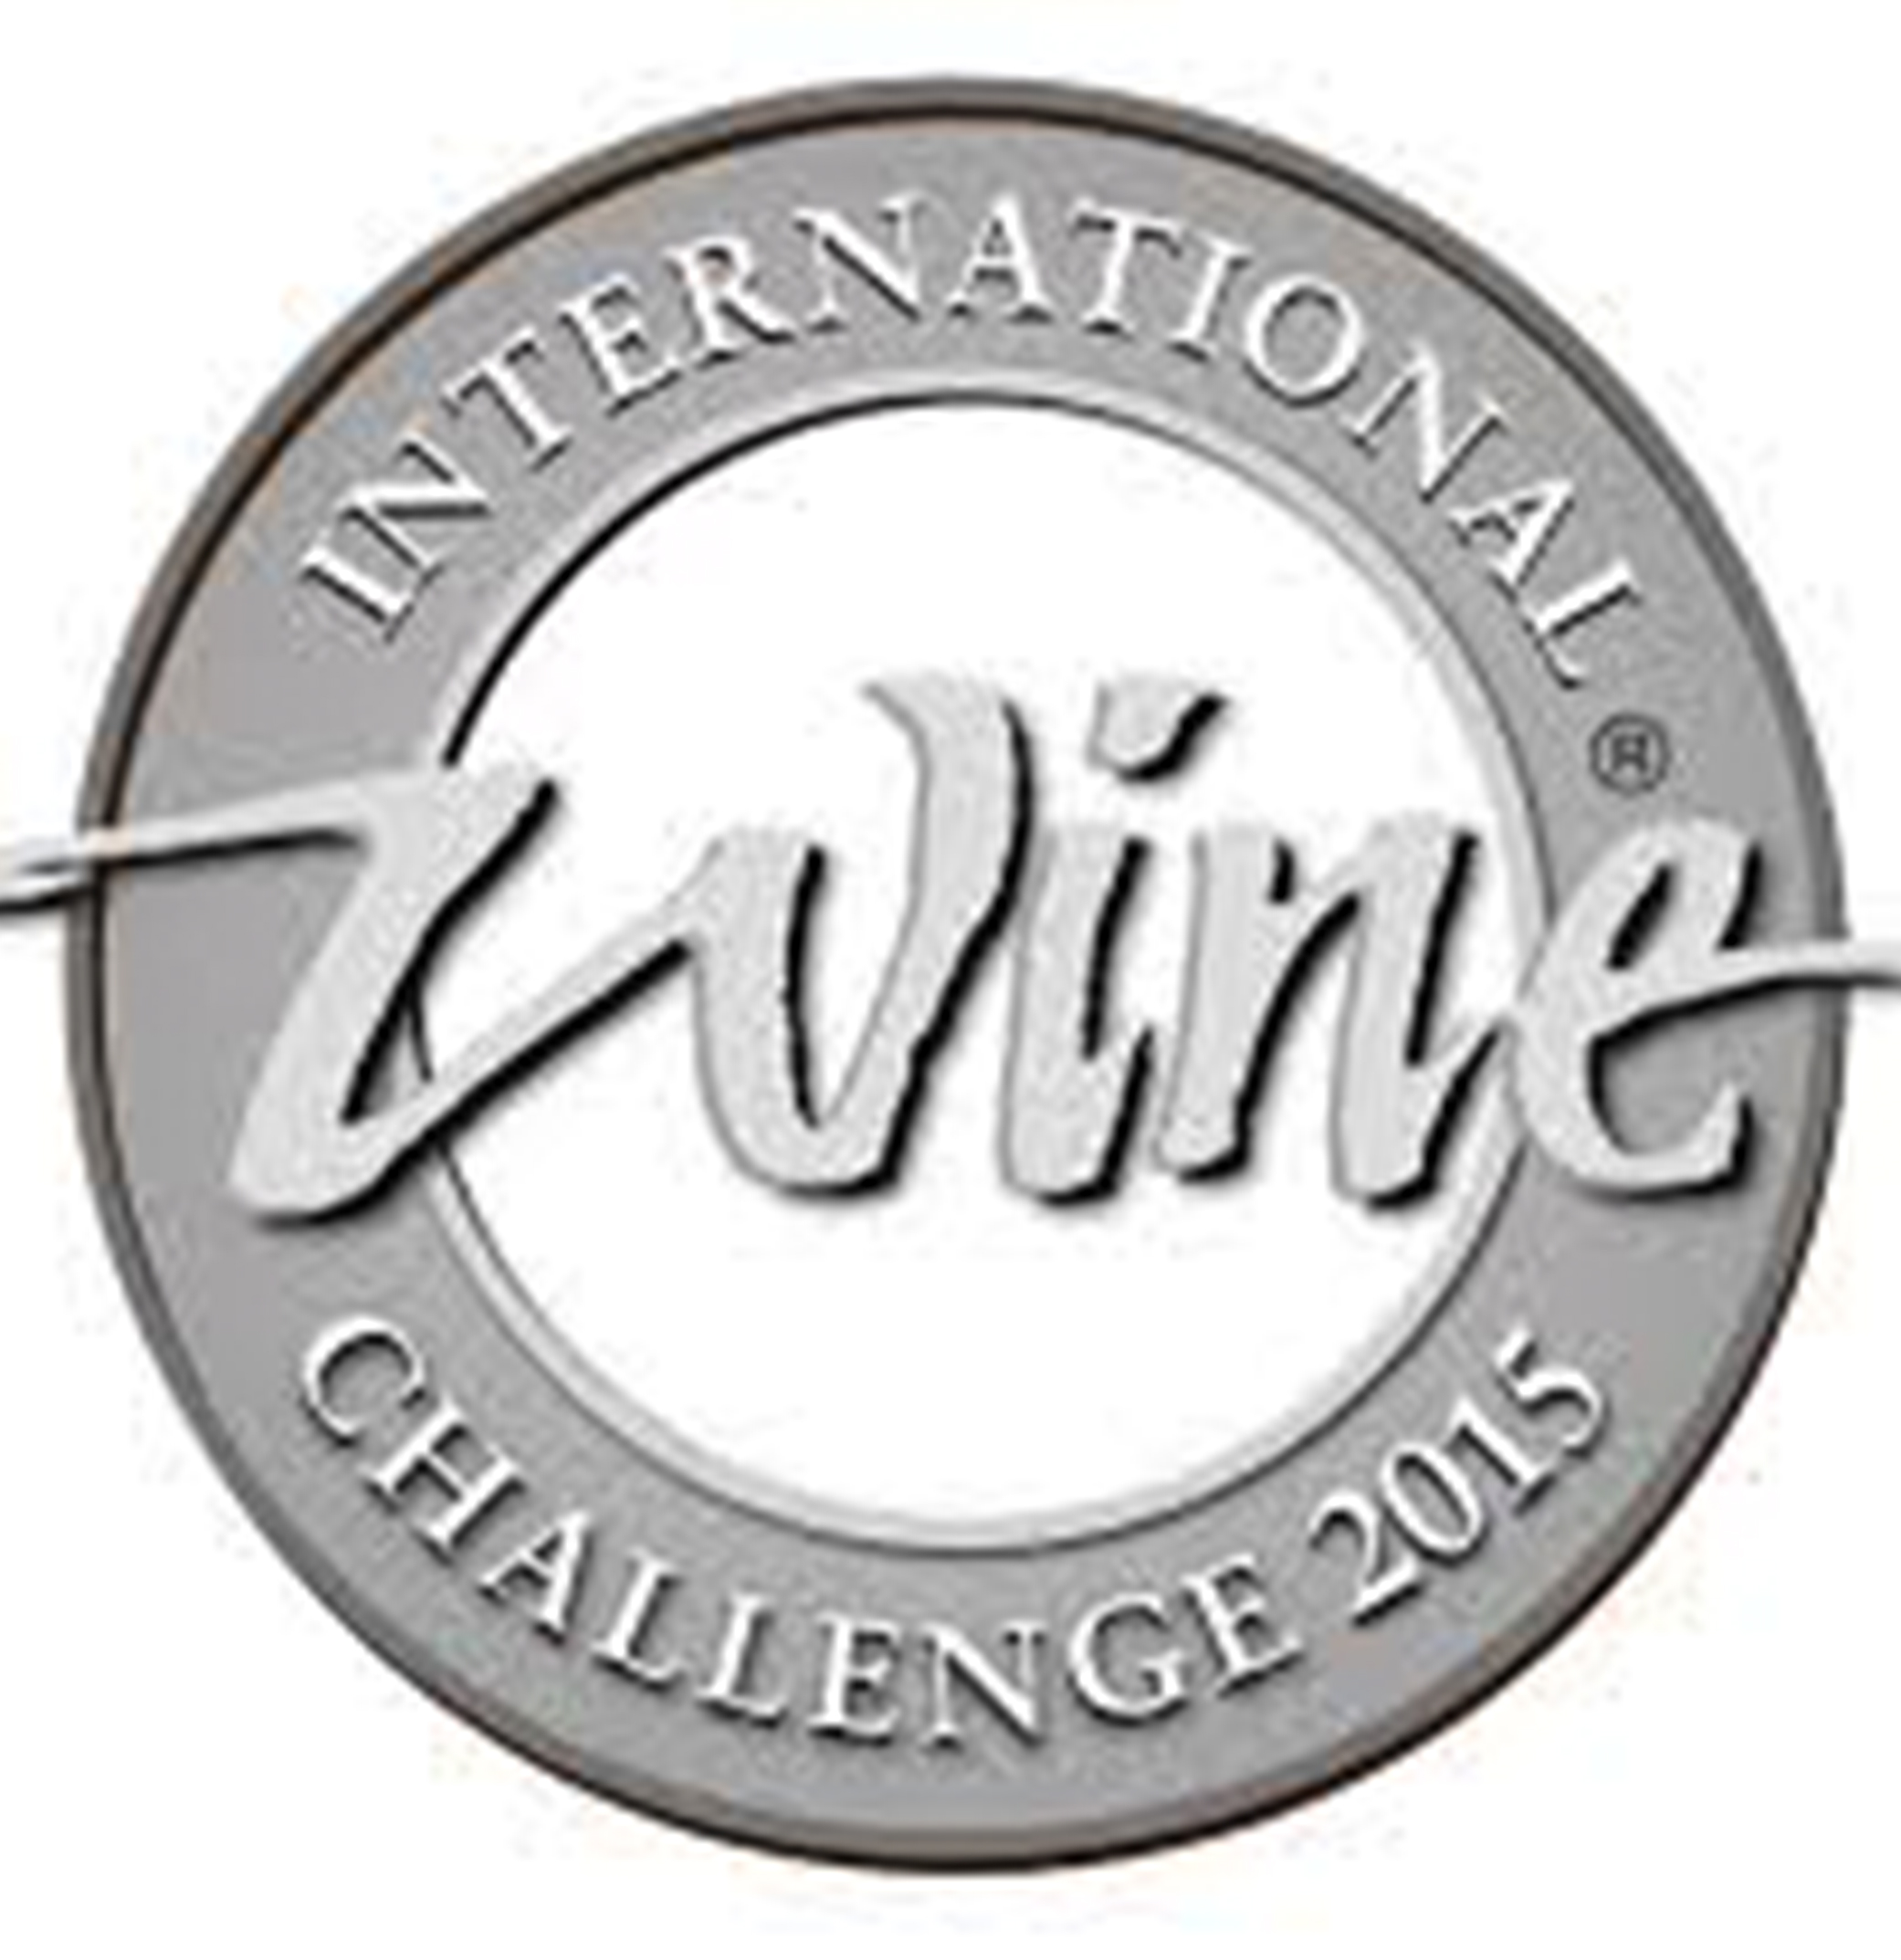 International Wine Challenge 2015